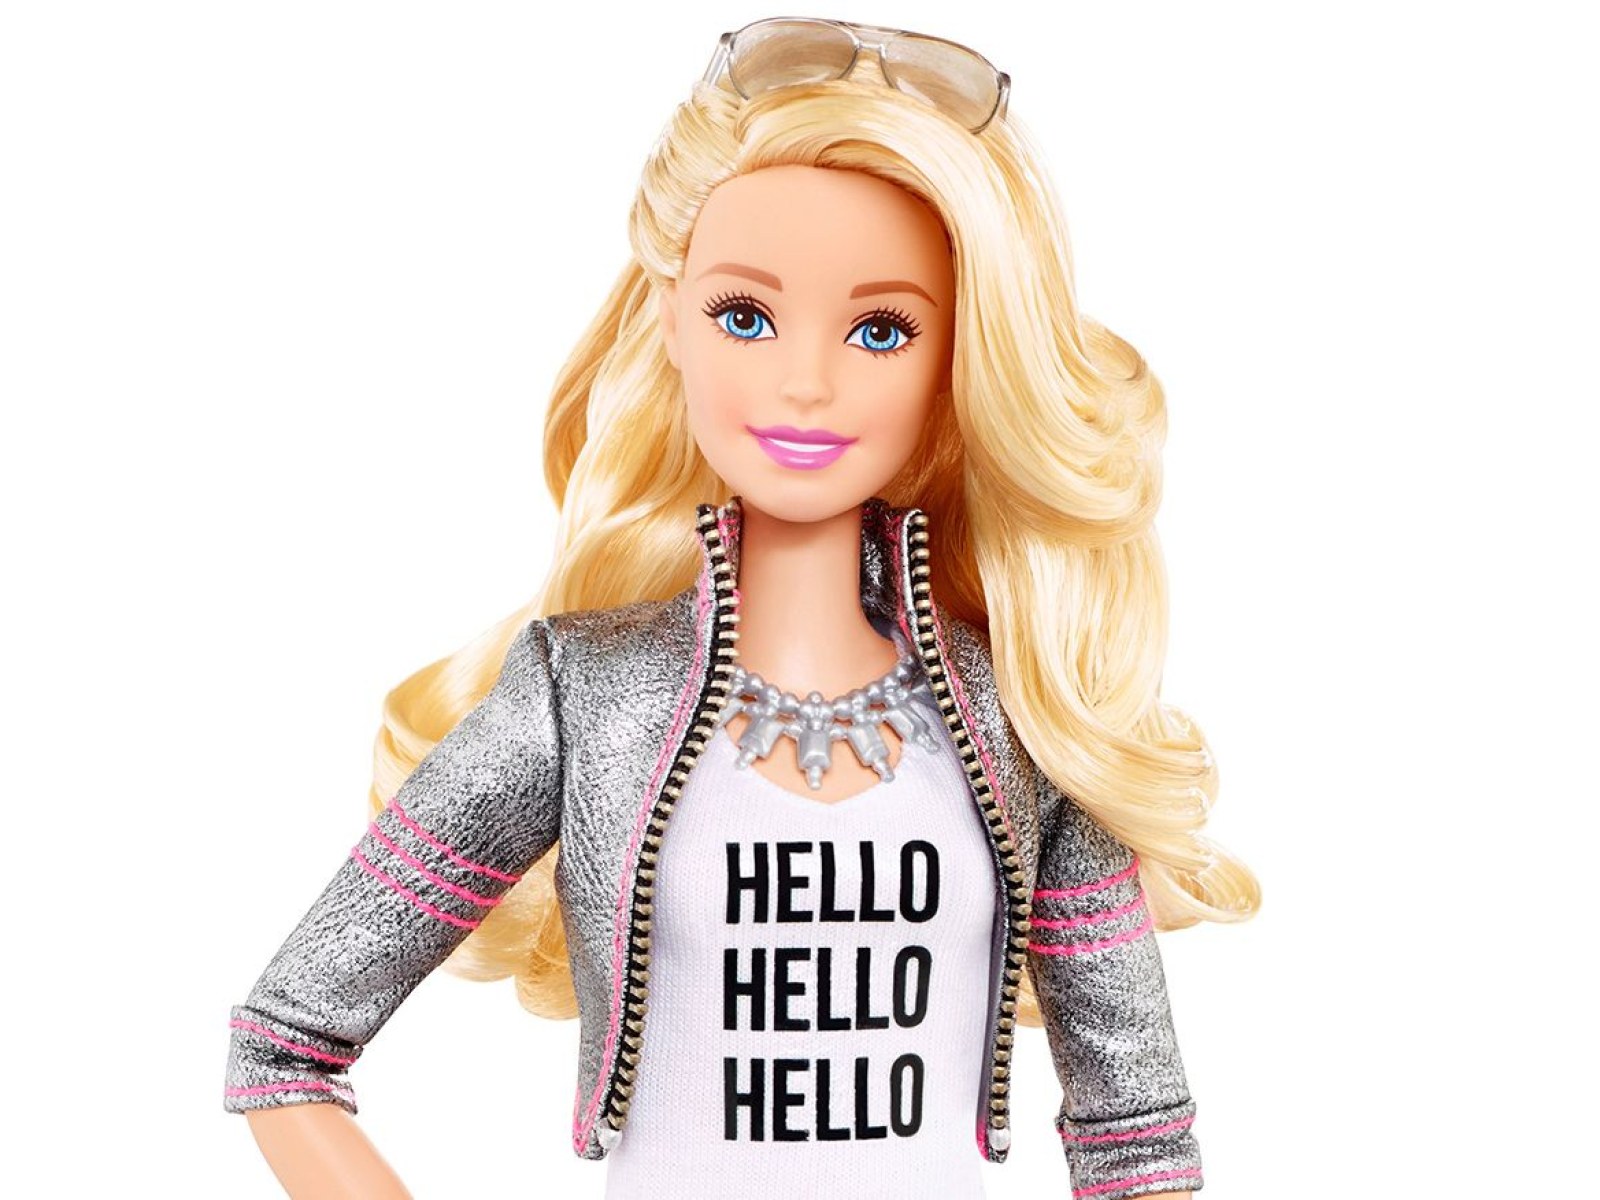 Meet Hello Barbie: A Wi-Fi Doll That Talks to Children